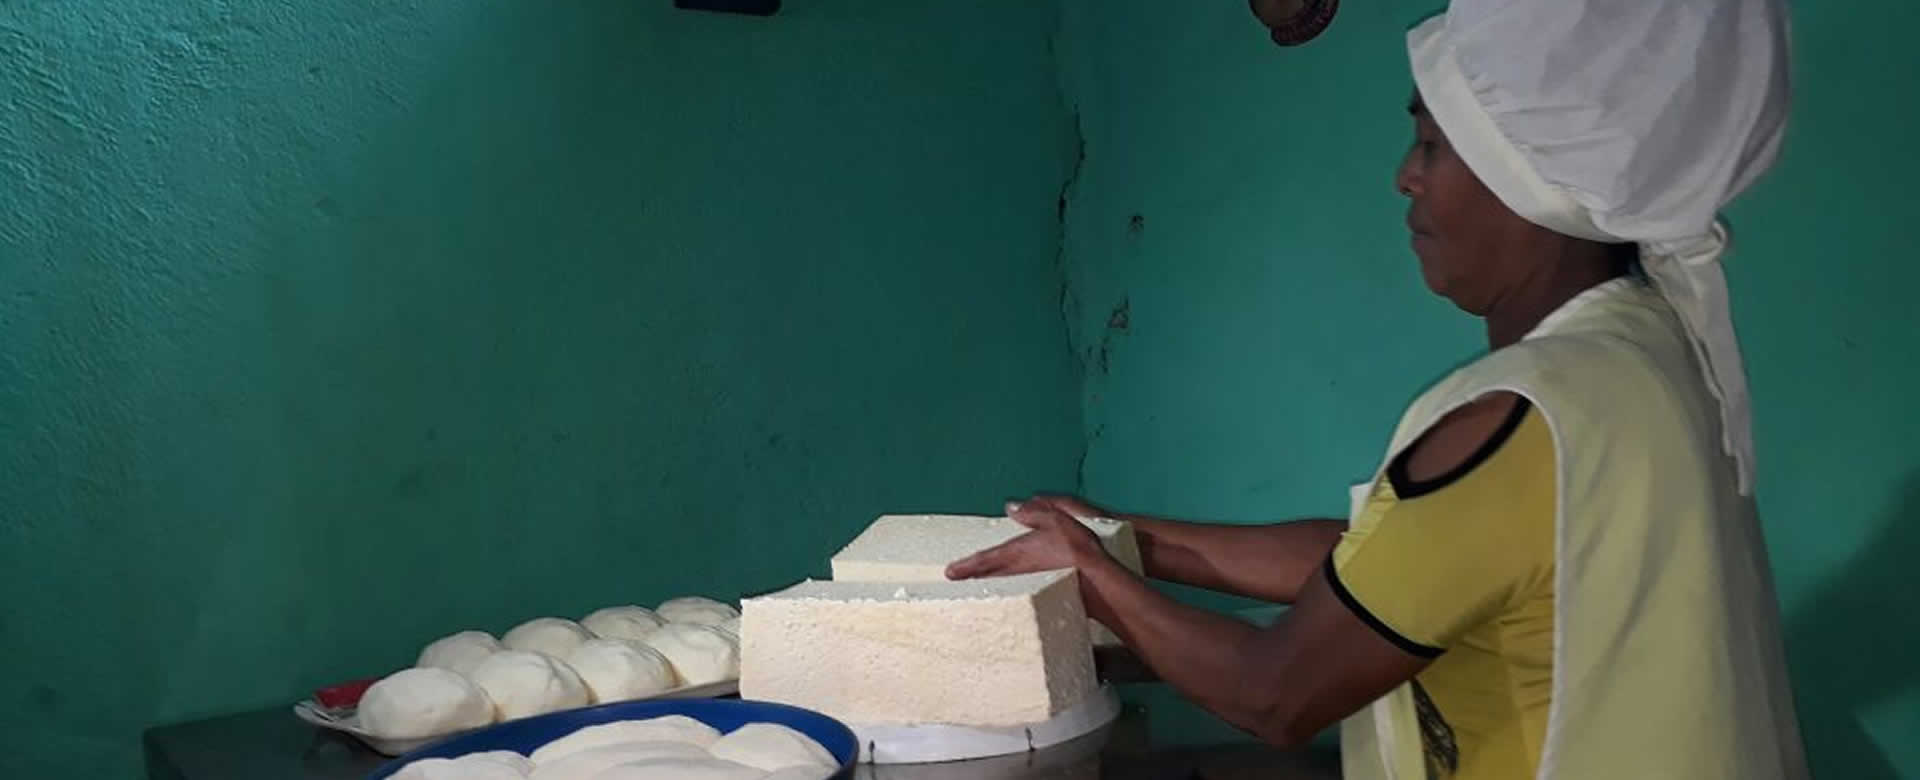 Mujeres de Telpaneca emprenden negocios de lácteos